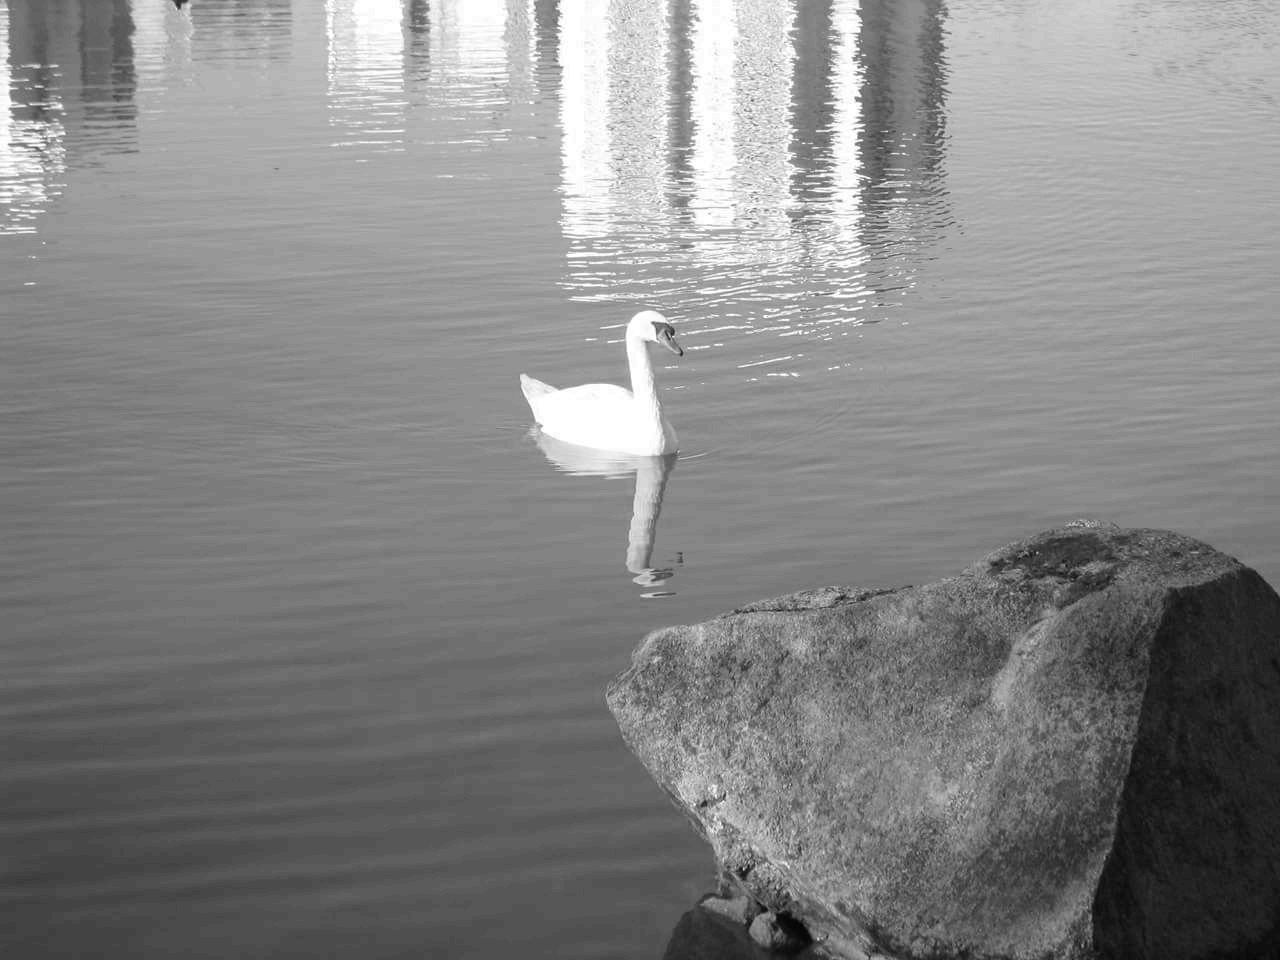 swan lake